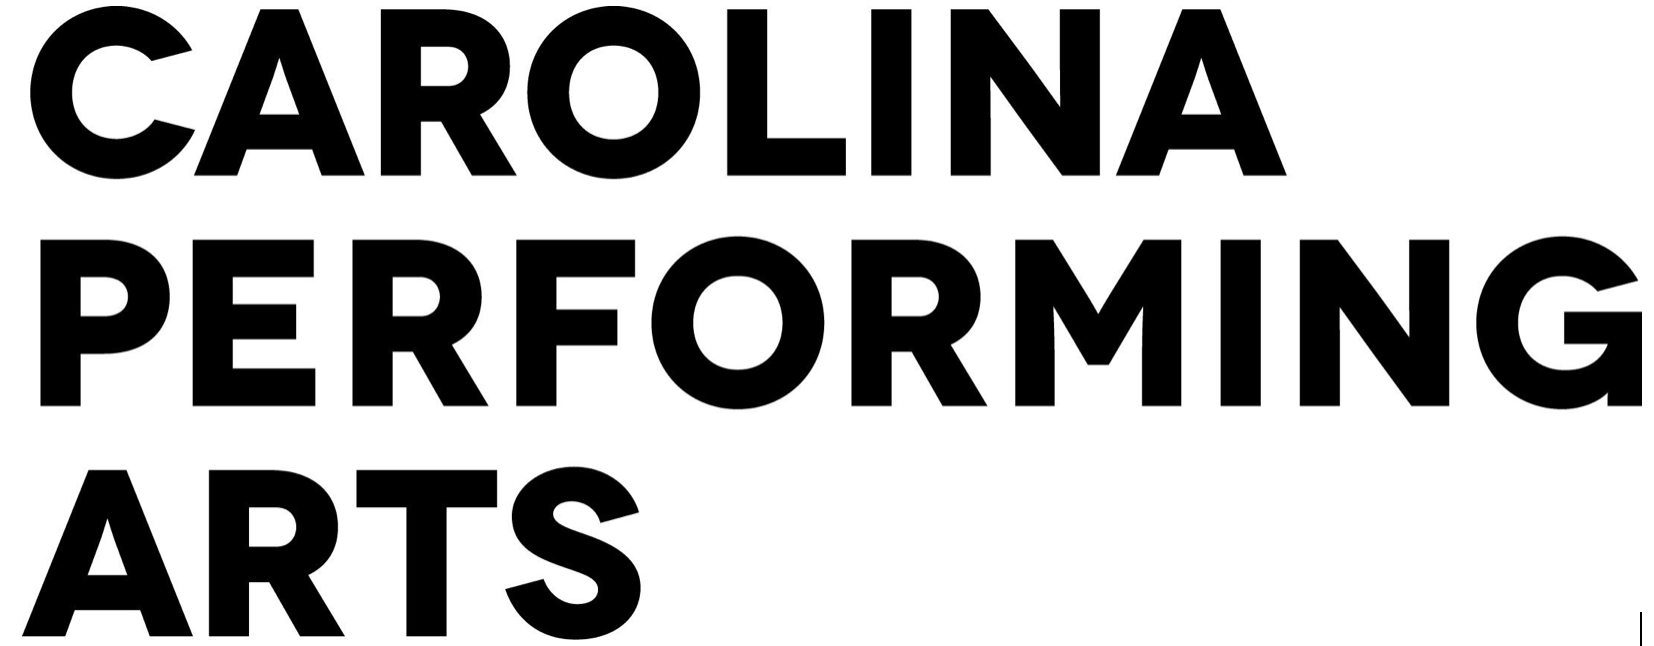 Carolina Performing Arts logo.png